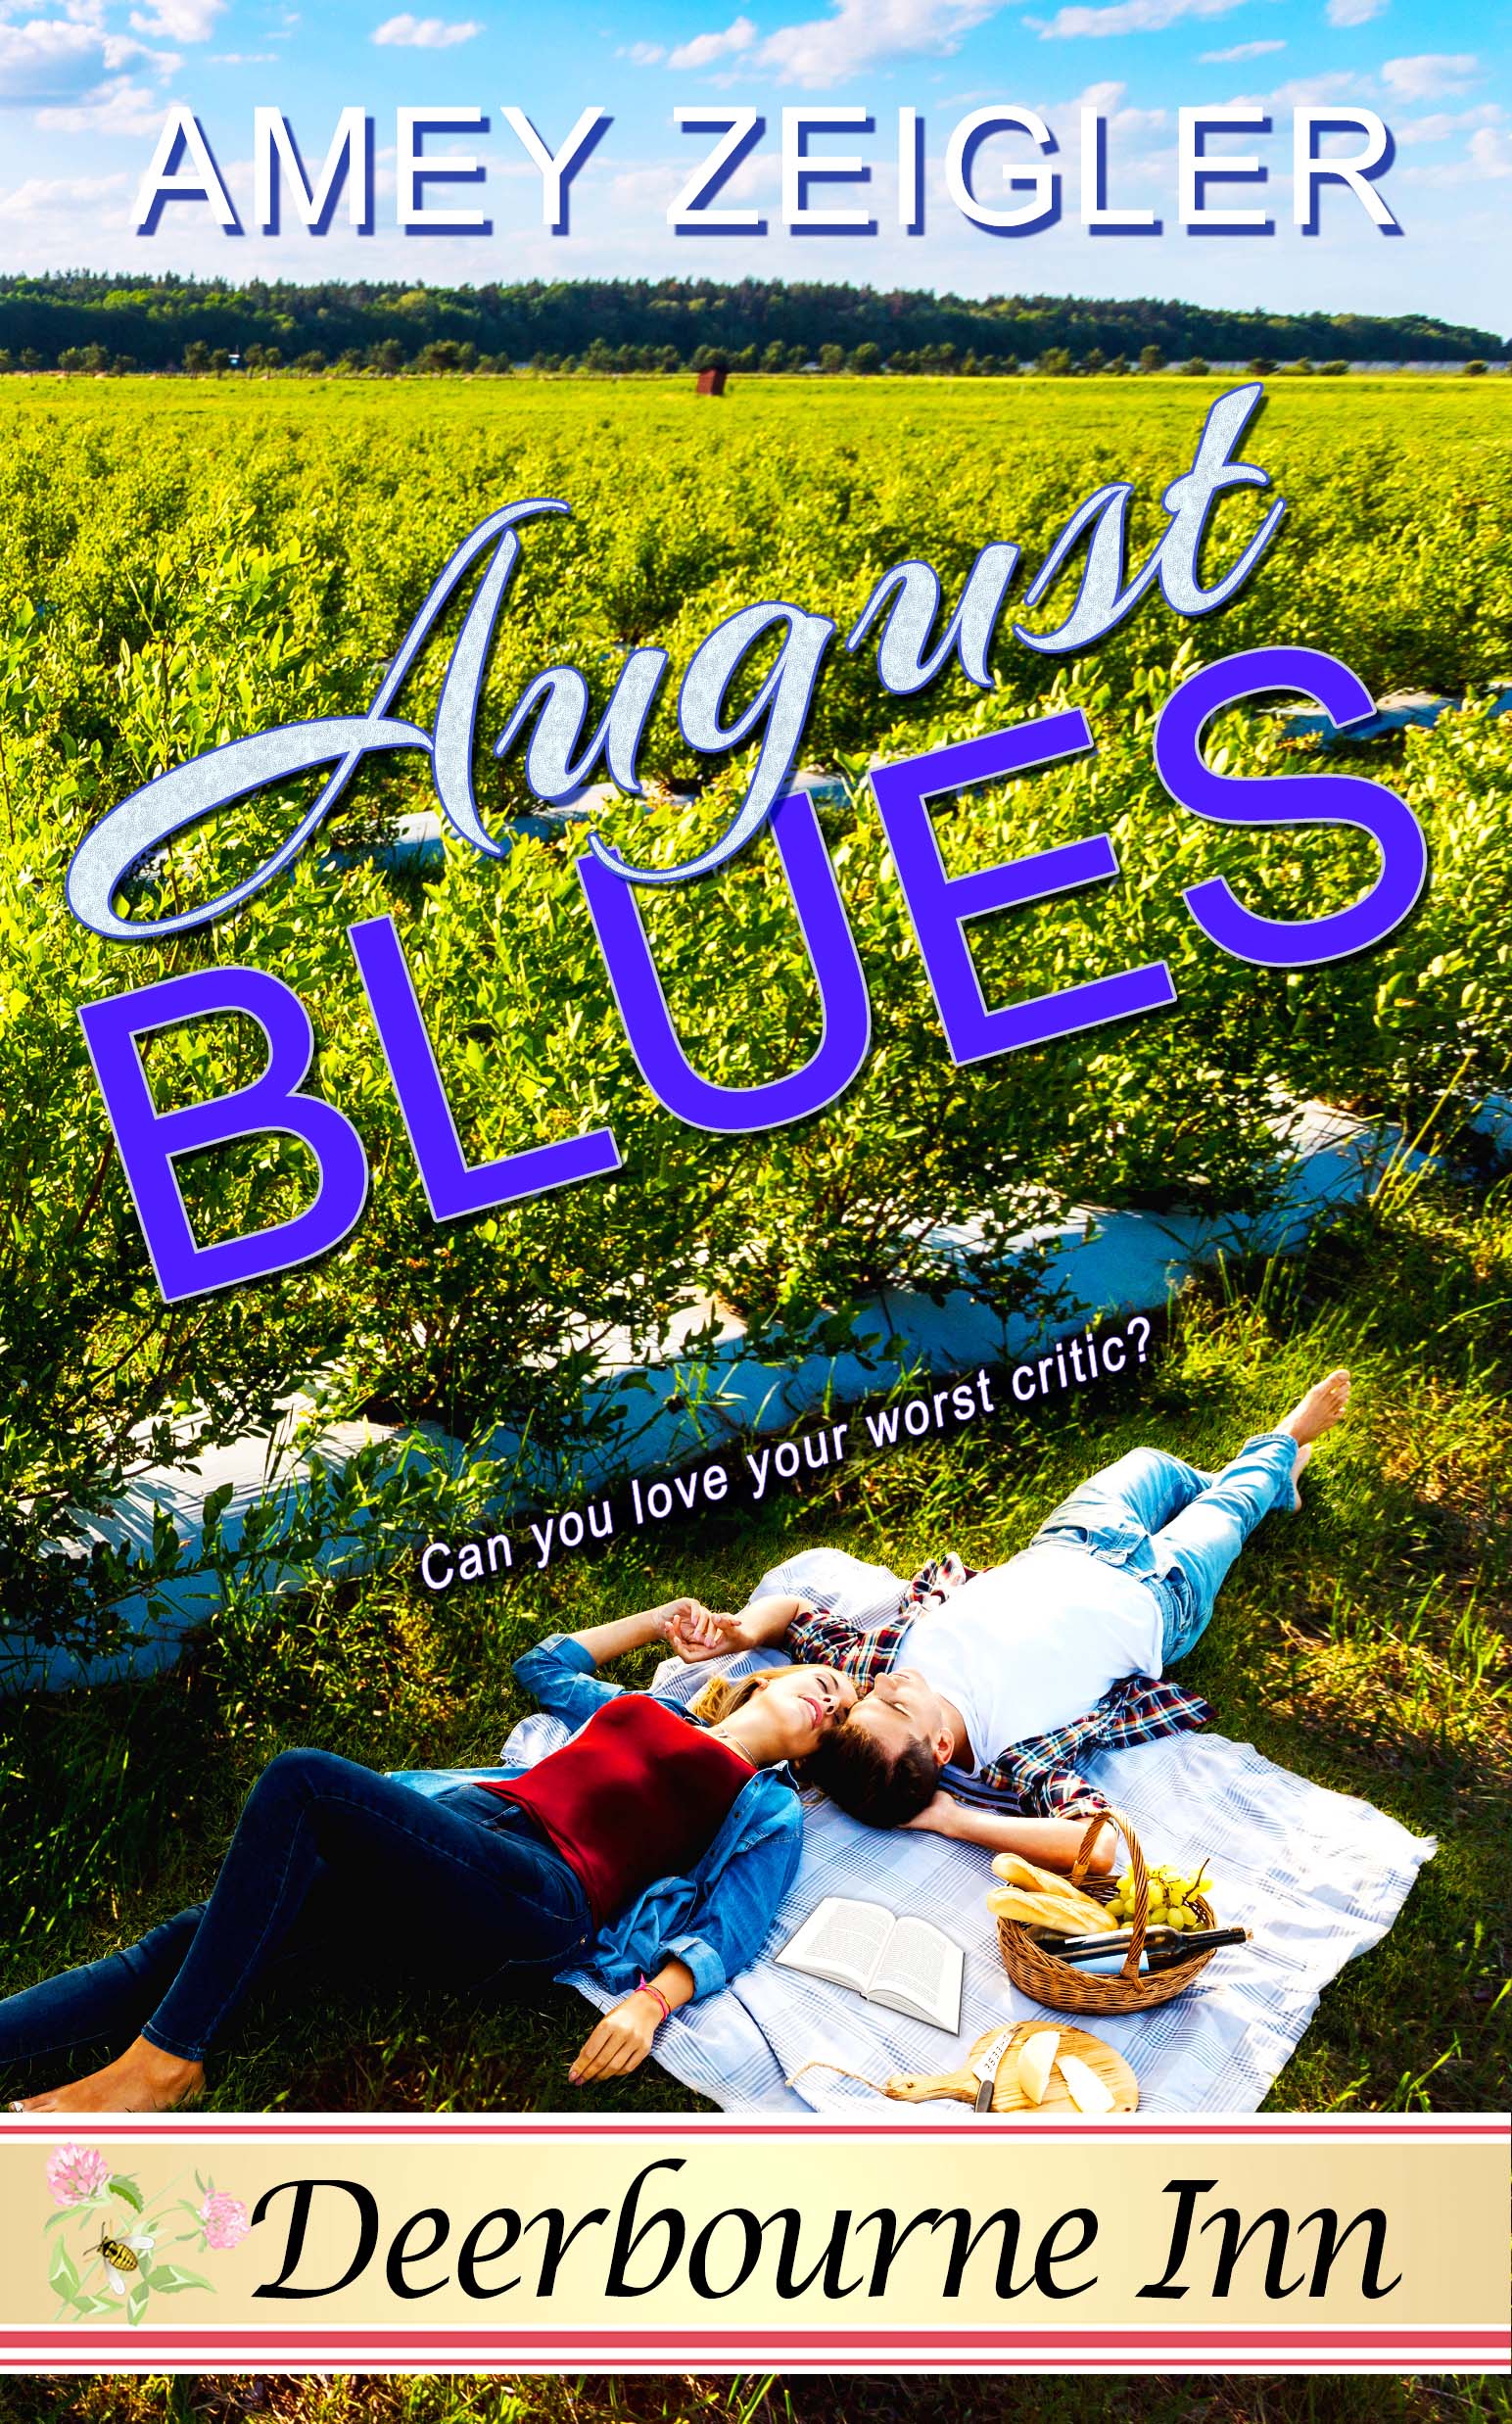 August Blues